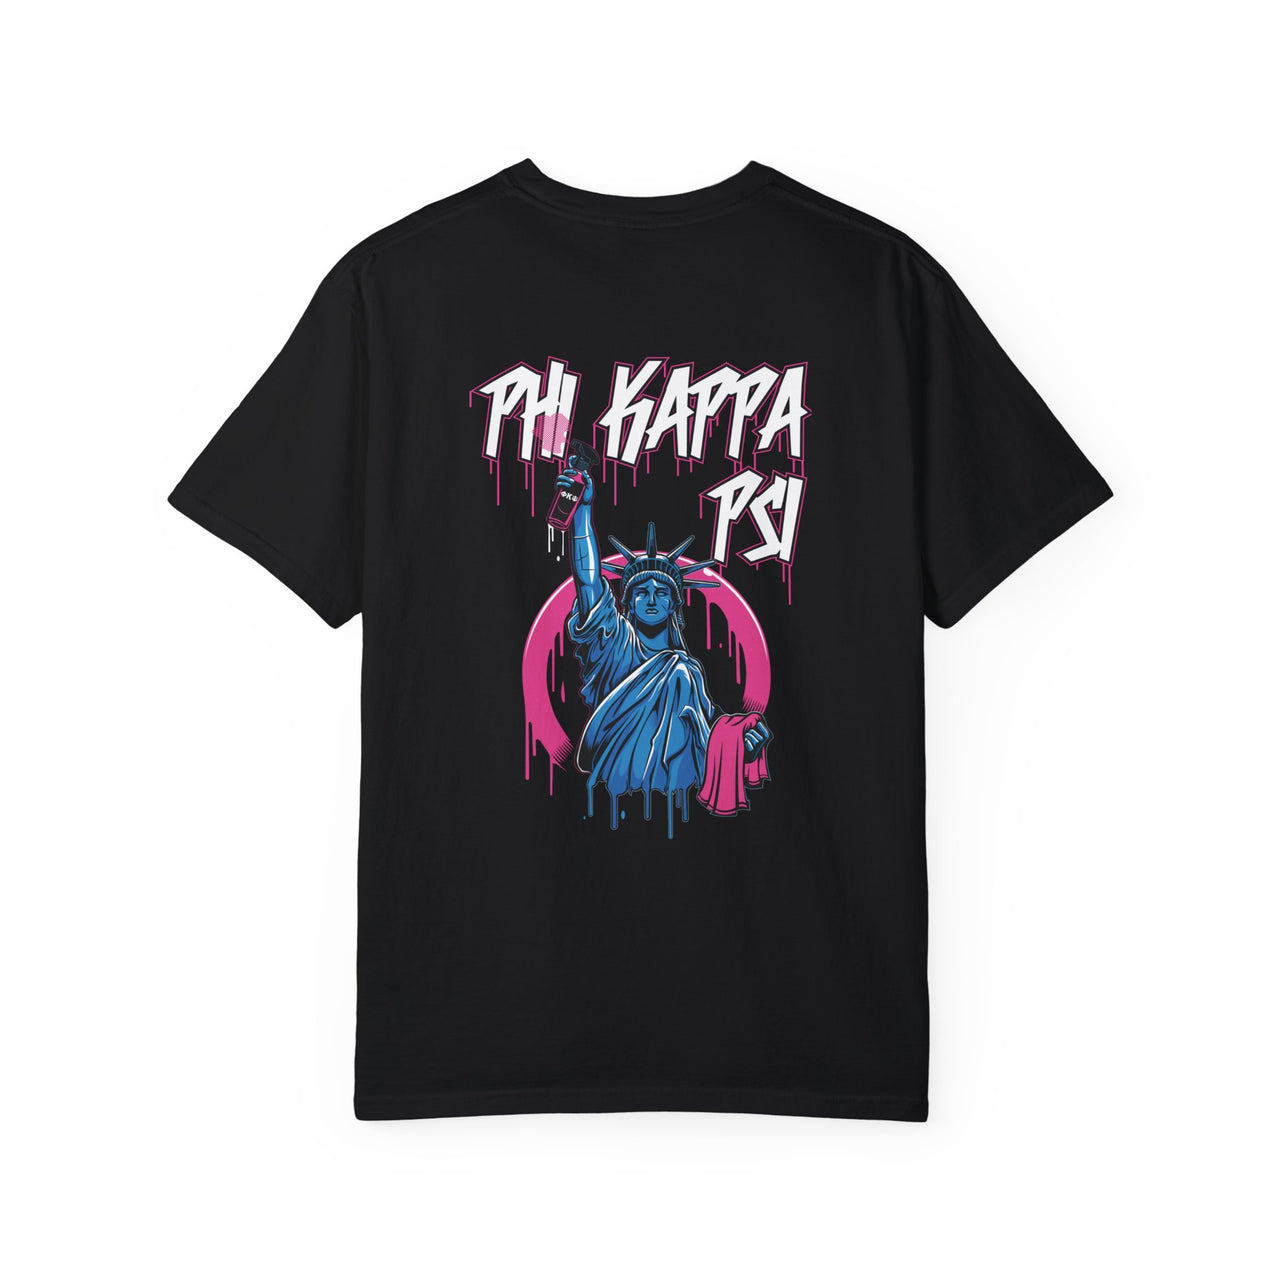 Phi Kappa Psi Graphic T-Shirt | Liberty Rebel